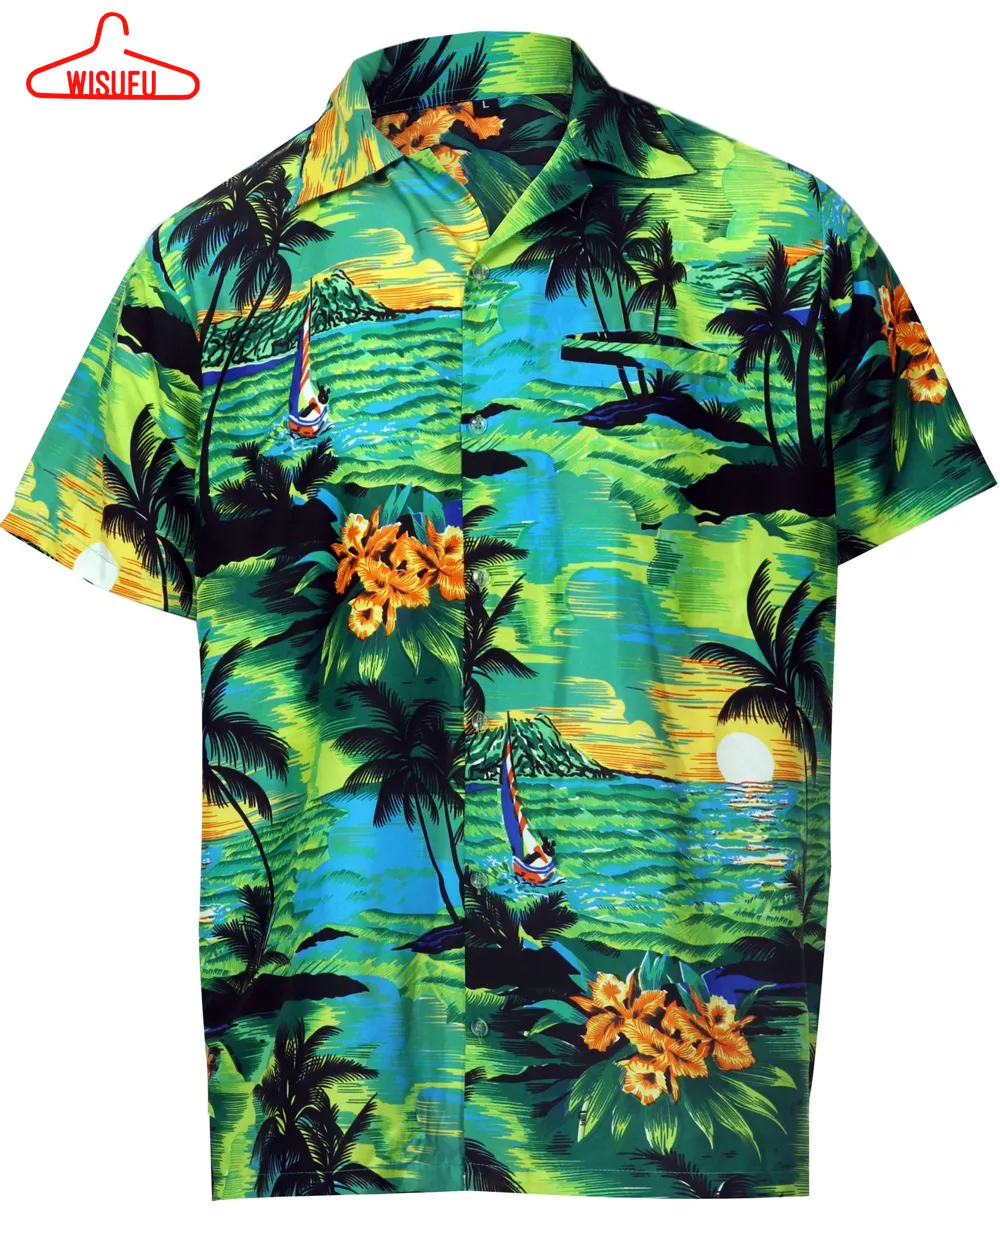 Beach Green Black Best Design Hawaiian Shirt Dhc18062014, New Hawaiian Holiday Outfits, New Fashion Gifts